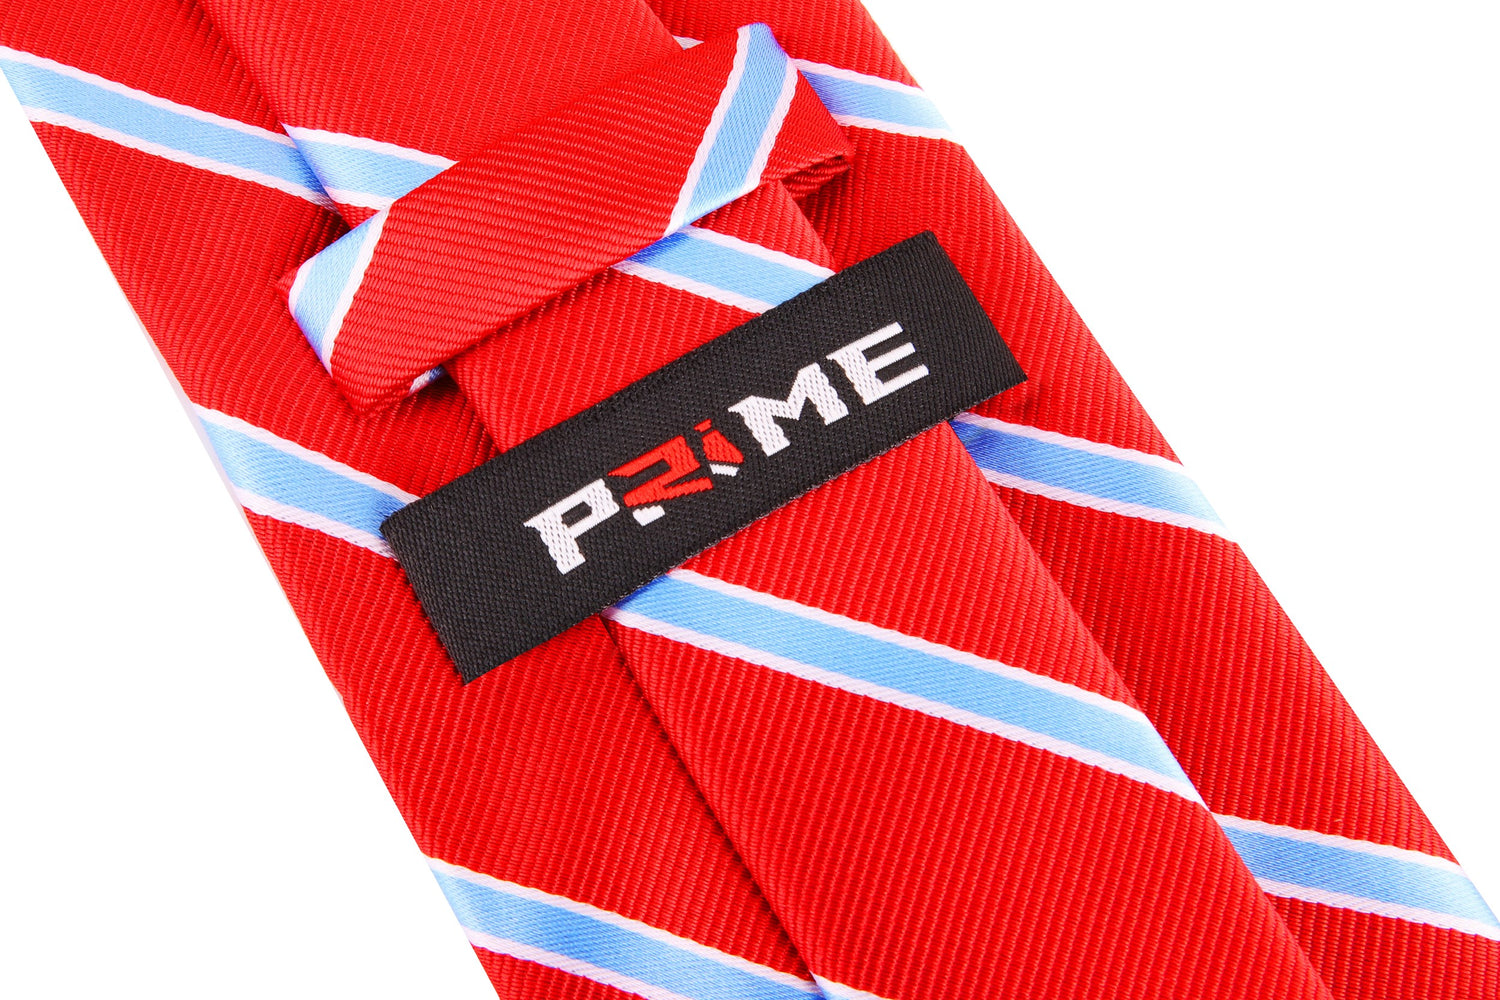 Coach PRIME Deion Sanders Red, Light Blue Stripe Tie Keep